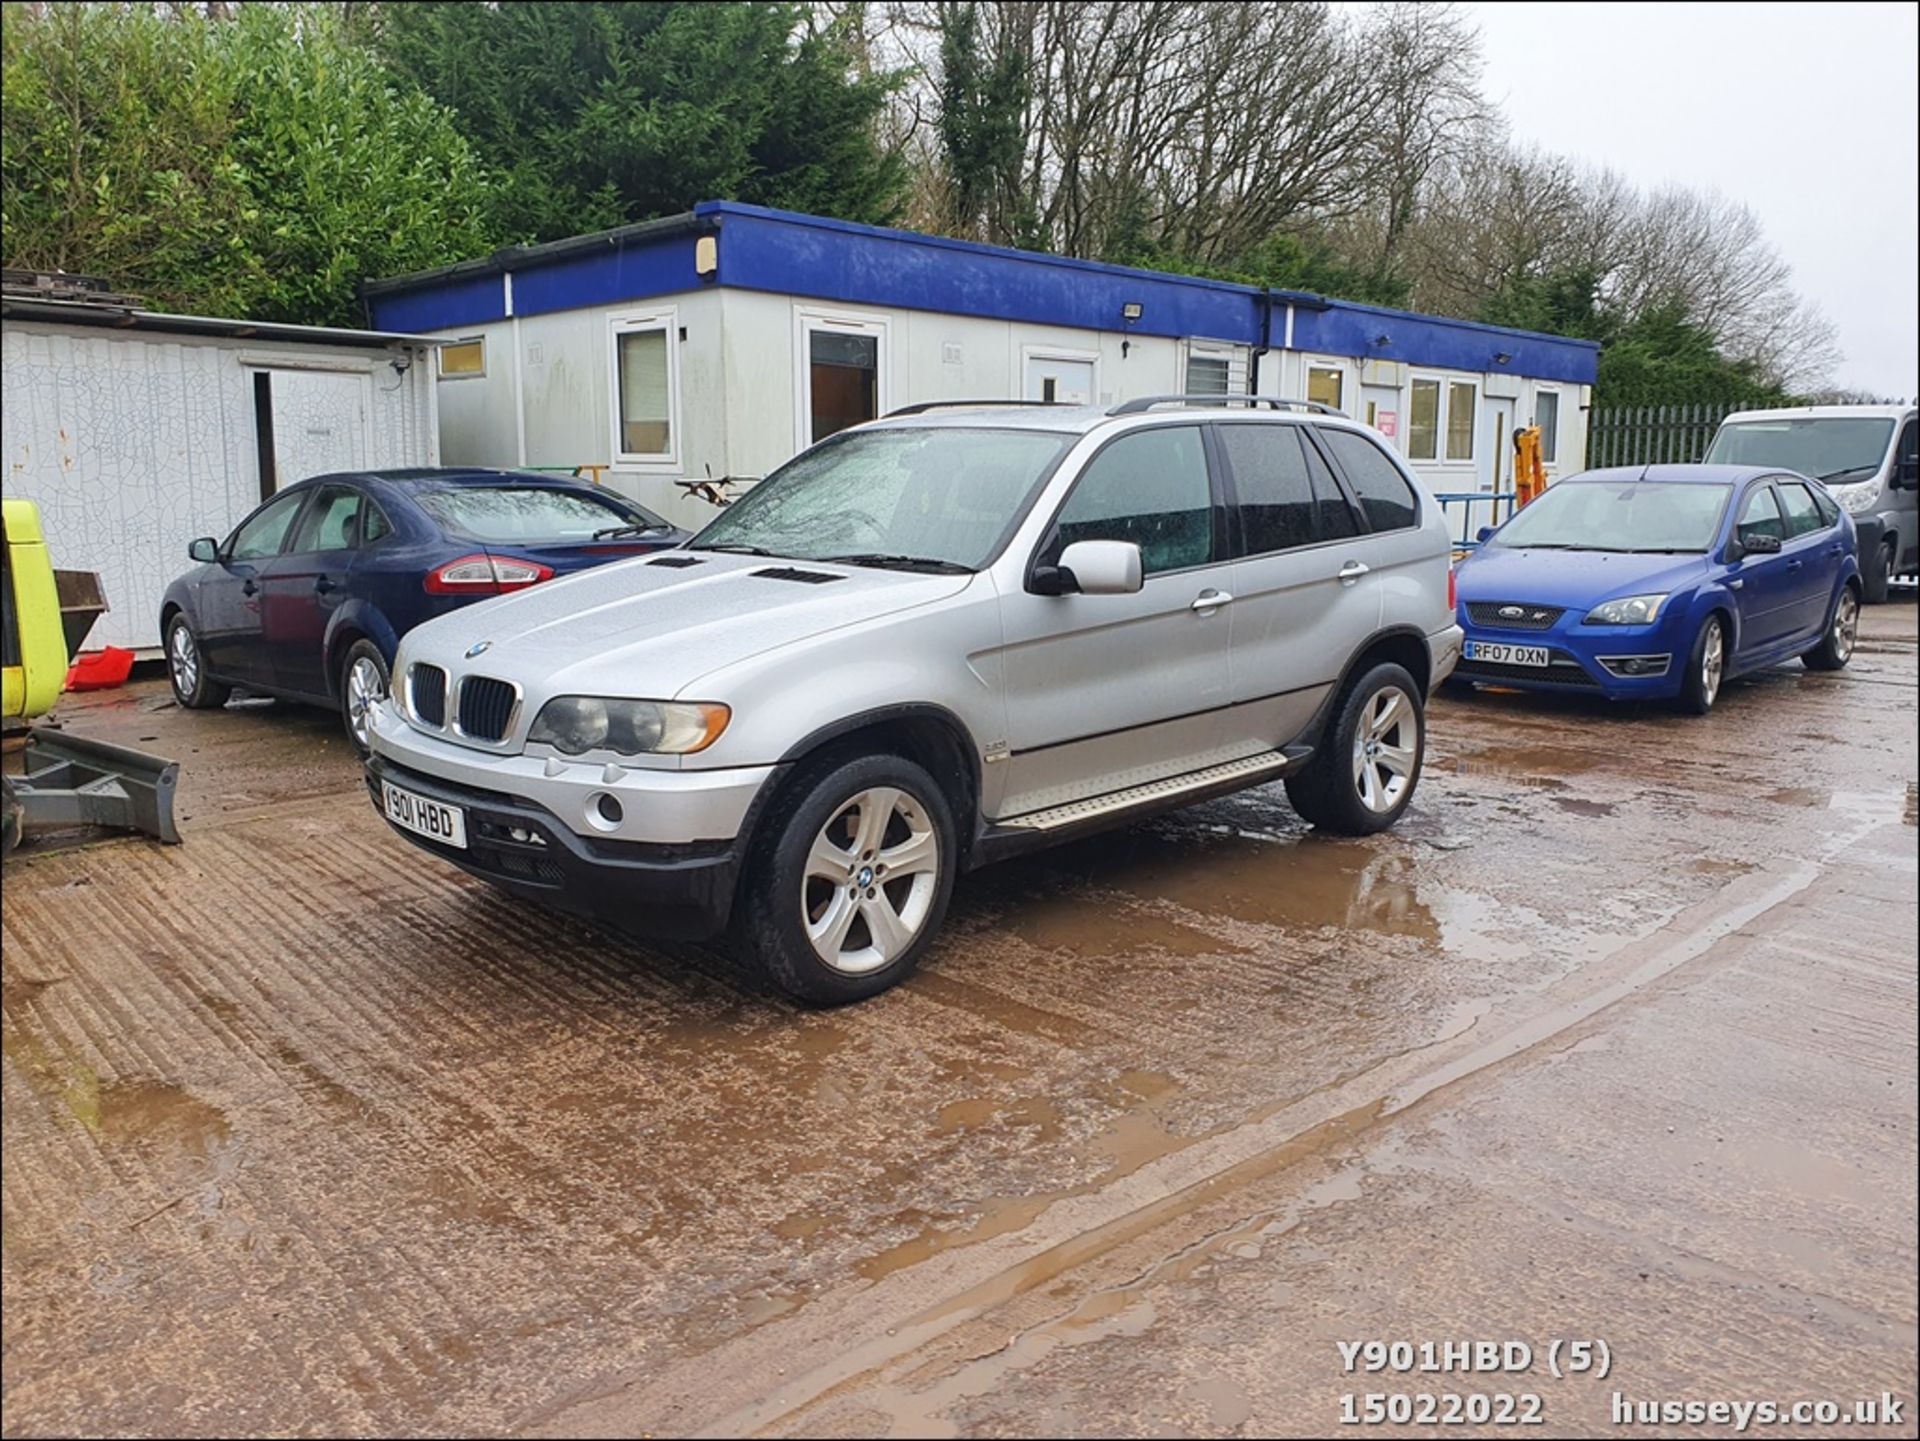 2001 BMW X5 SPORT AUTO - 2979cc 5dr Estate (Silver, 119k) - Image 16 of 41